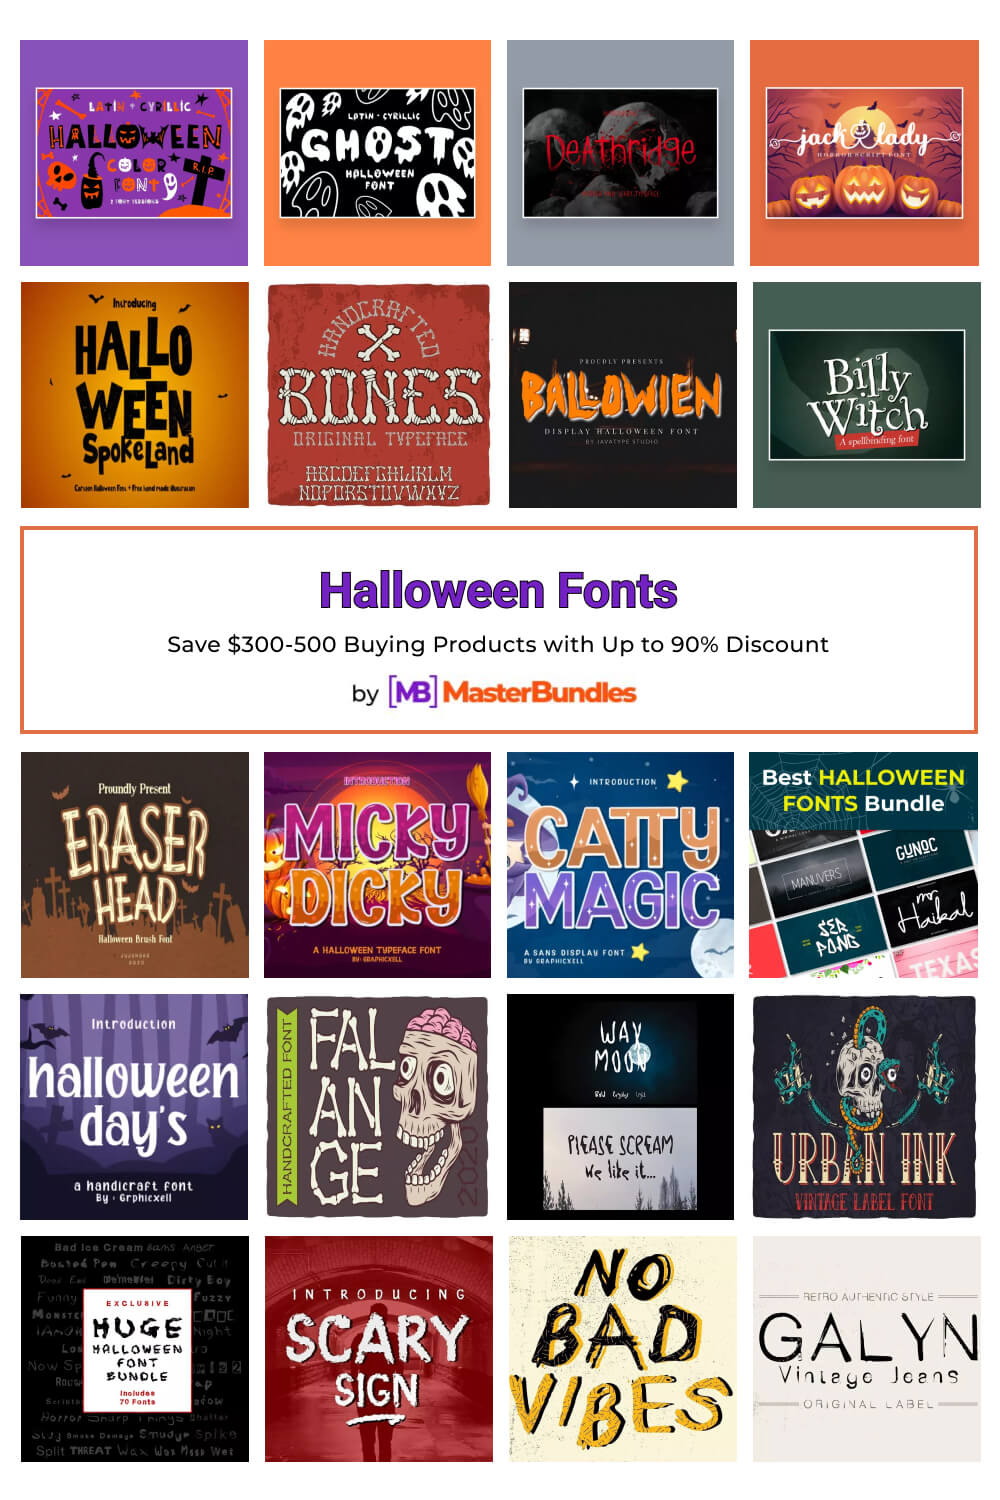 halloween fonts pinterest image.